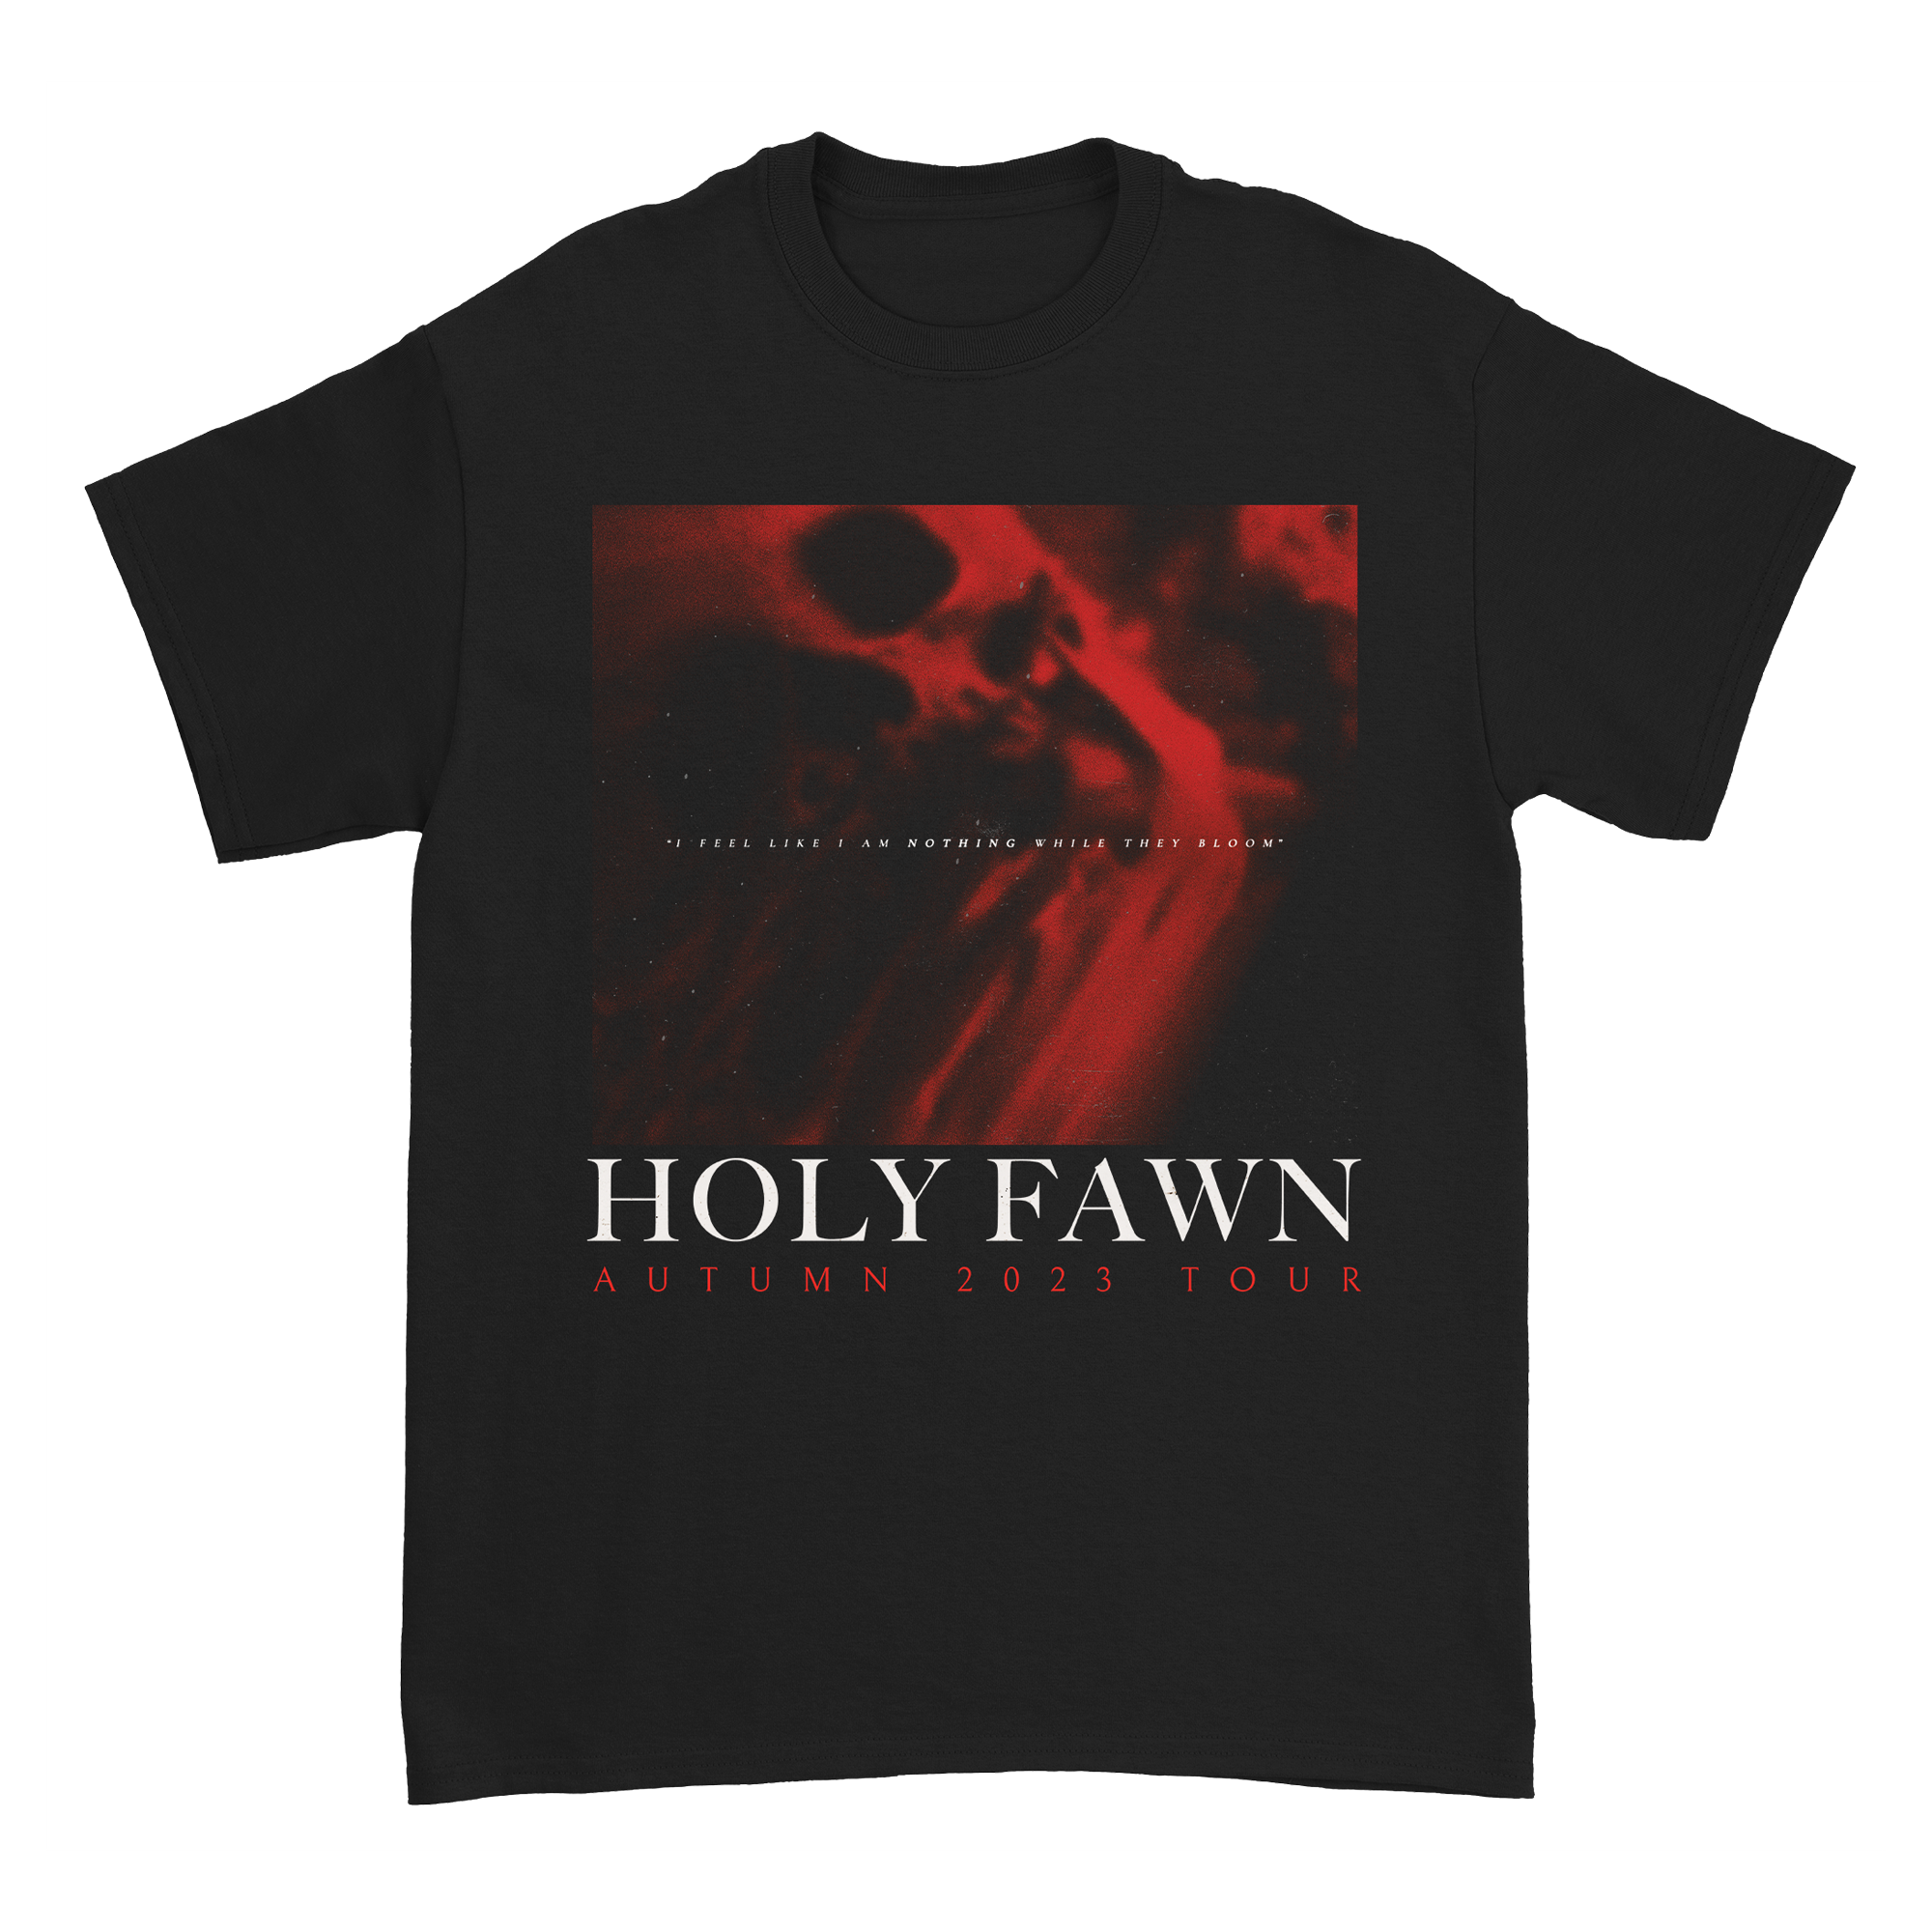 Holy Fawn - Tour T-Shirt